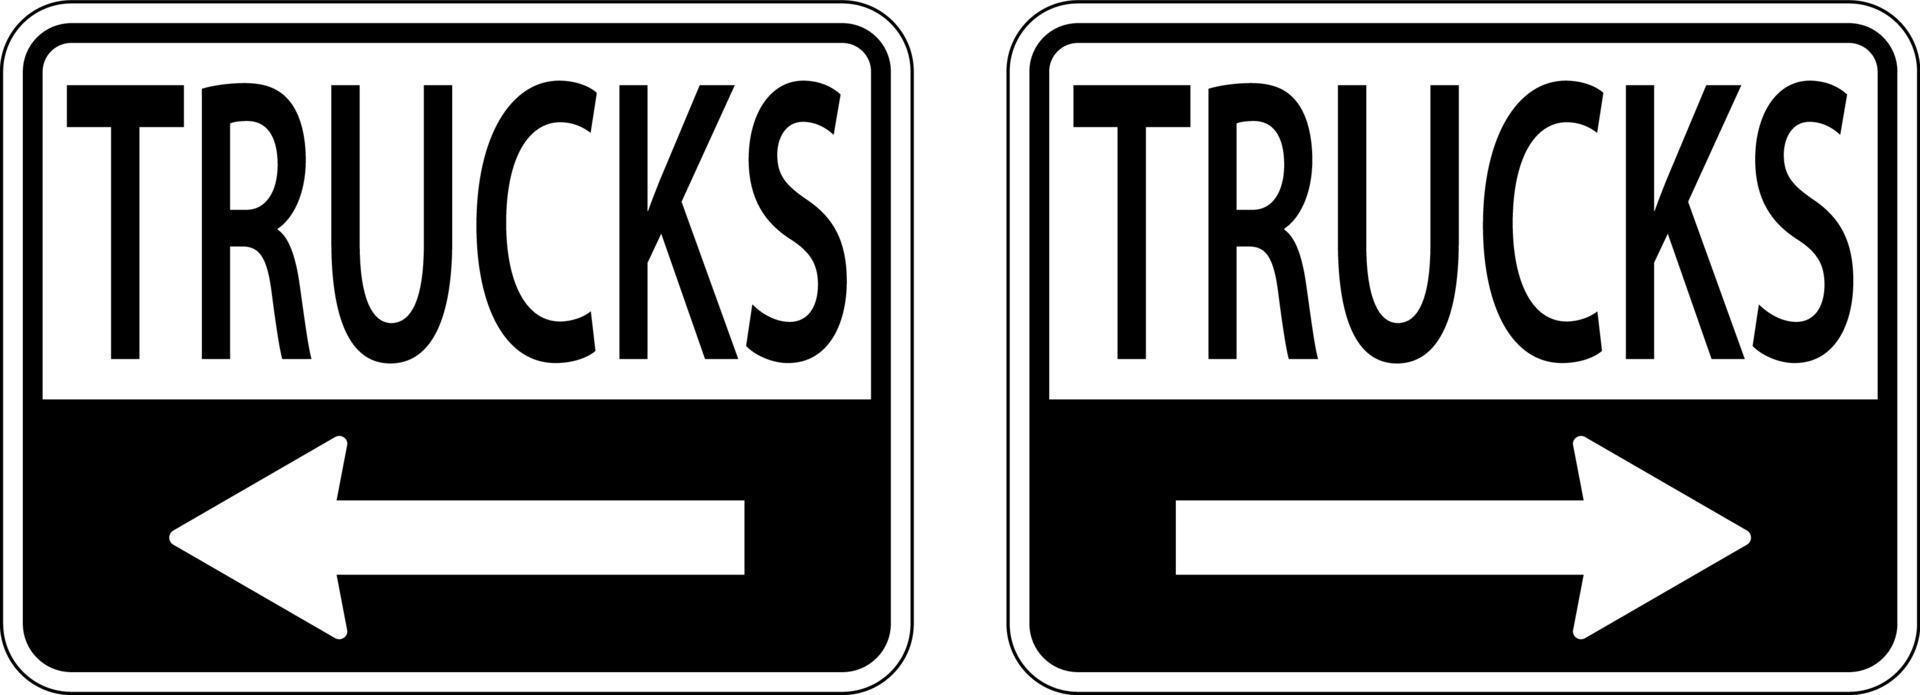 Trucks Left Arrow ,Right Arrow Sign On White Background vector